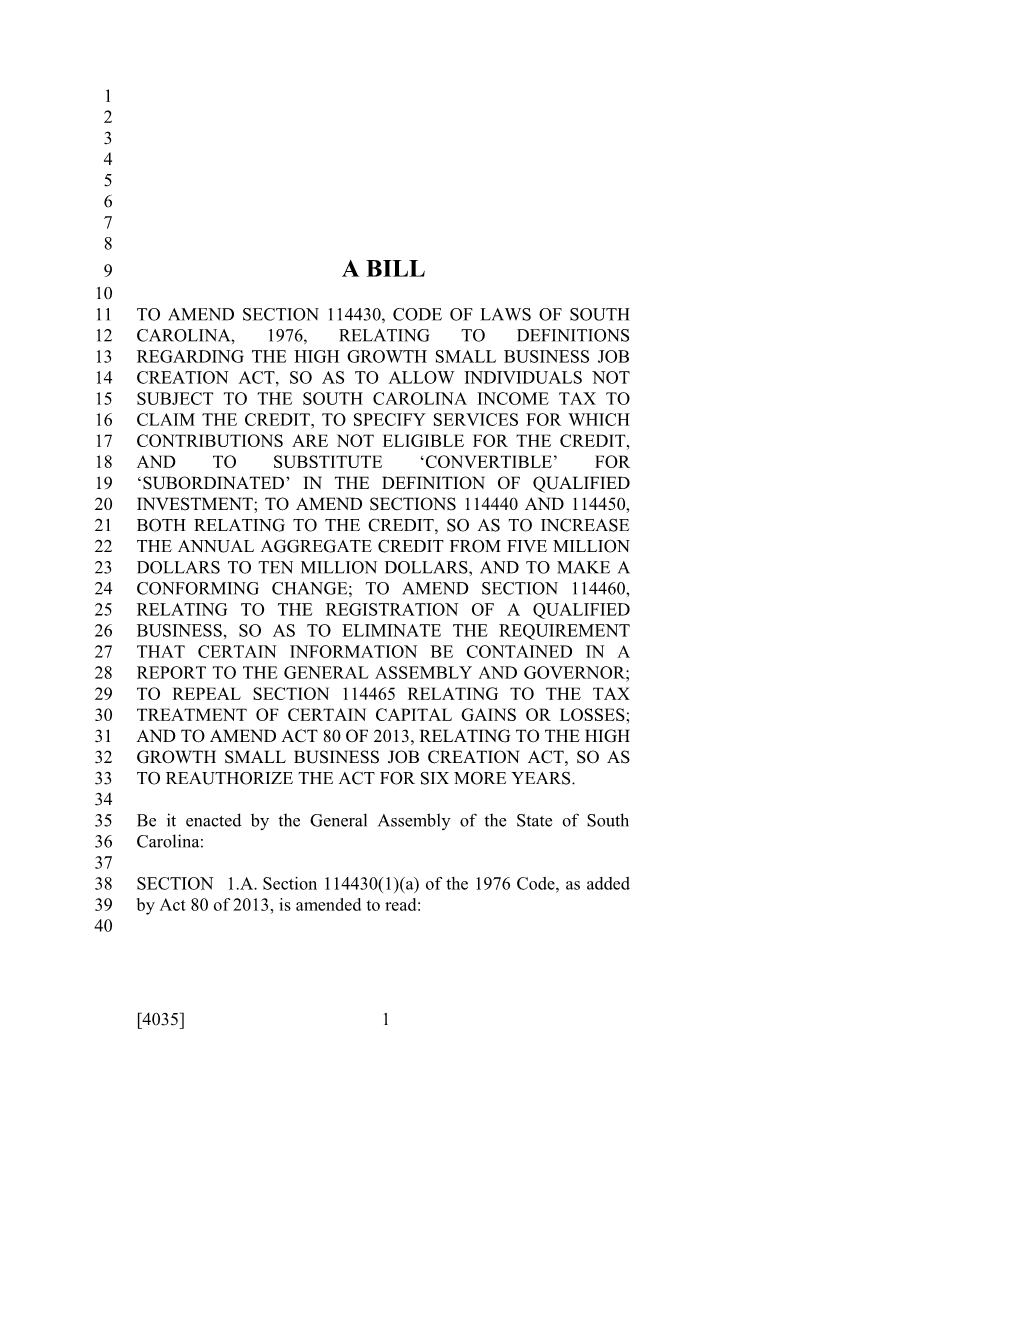 2017-2018 Bill 4035 Text of Previous Version (Mar. 22, 2017) - South Carolina Legislature Online